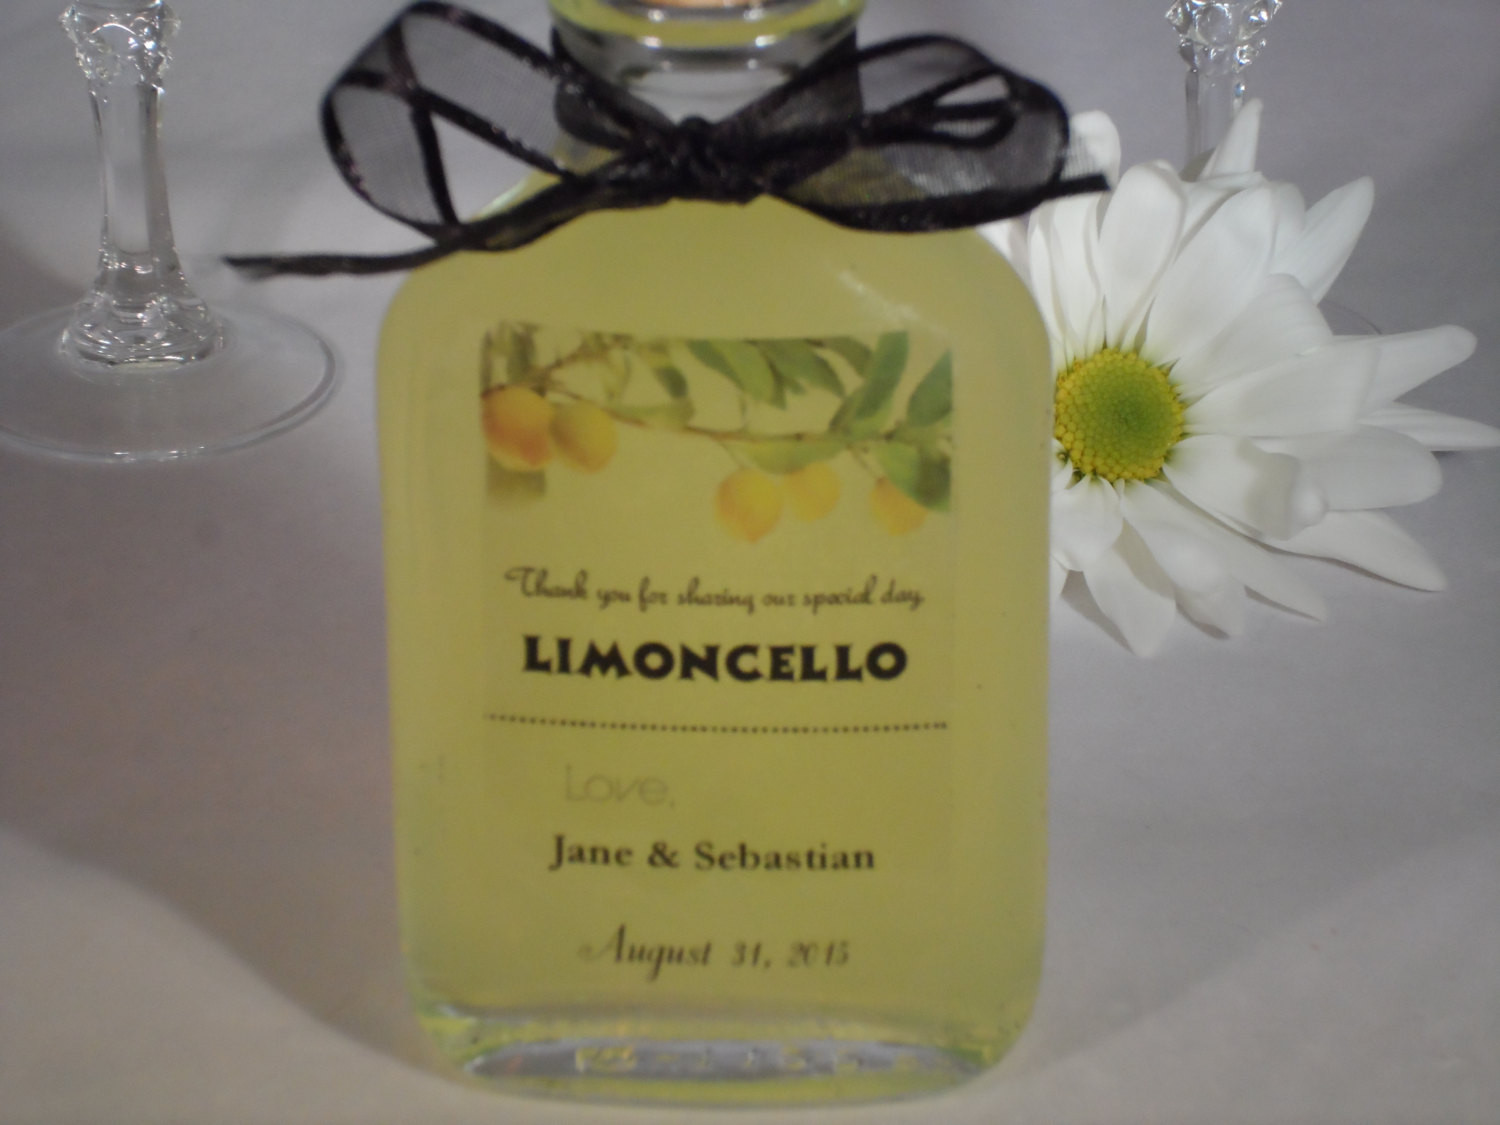 Limoncello Wedding Favors
 Custom Limoncello Labels & Bottles Great for Wedding Favors